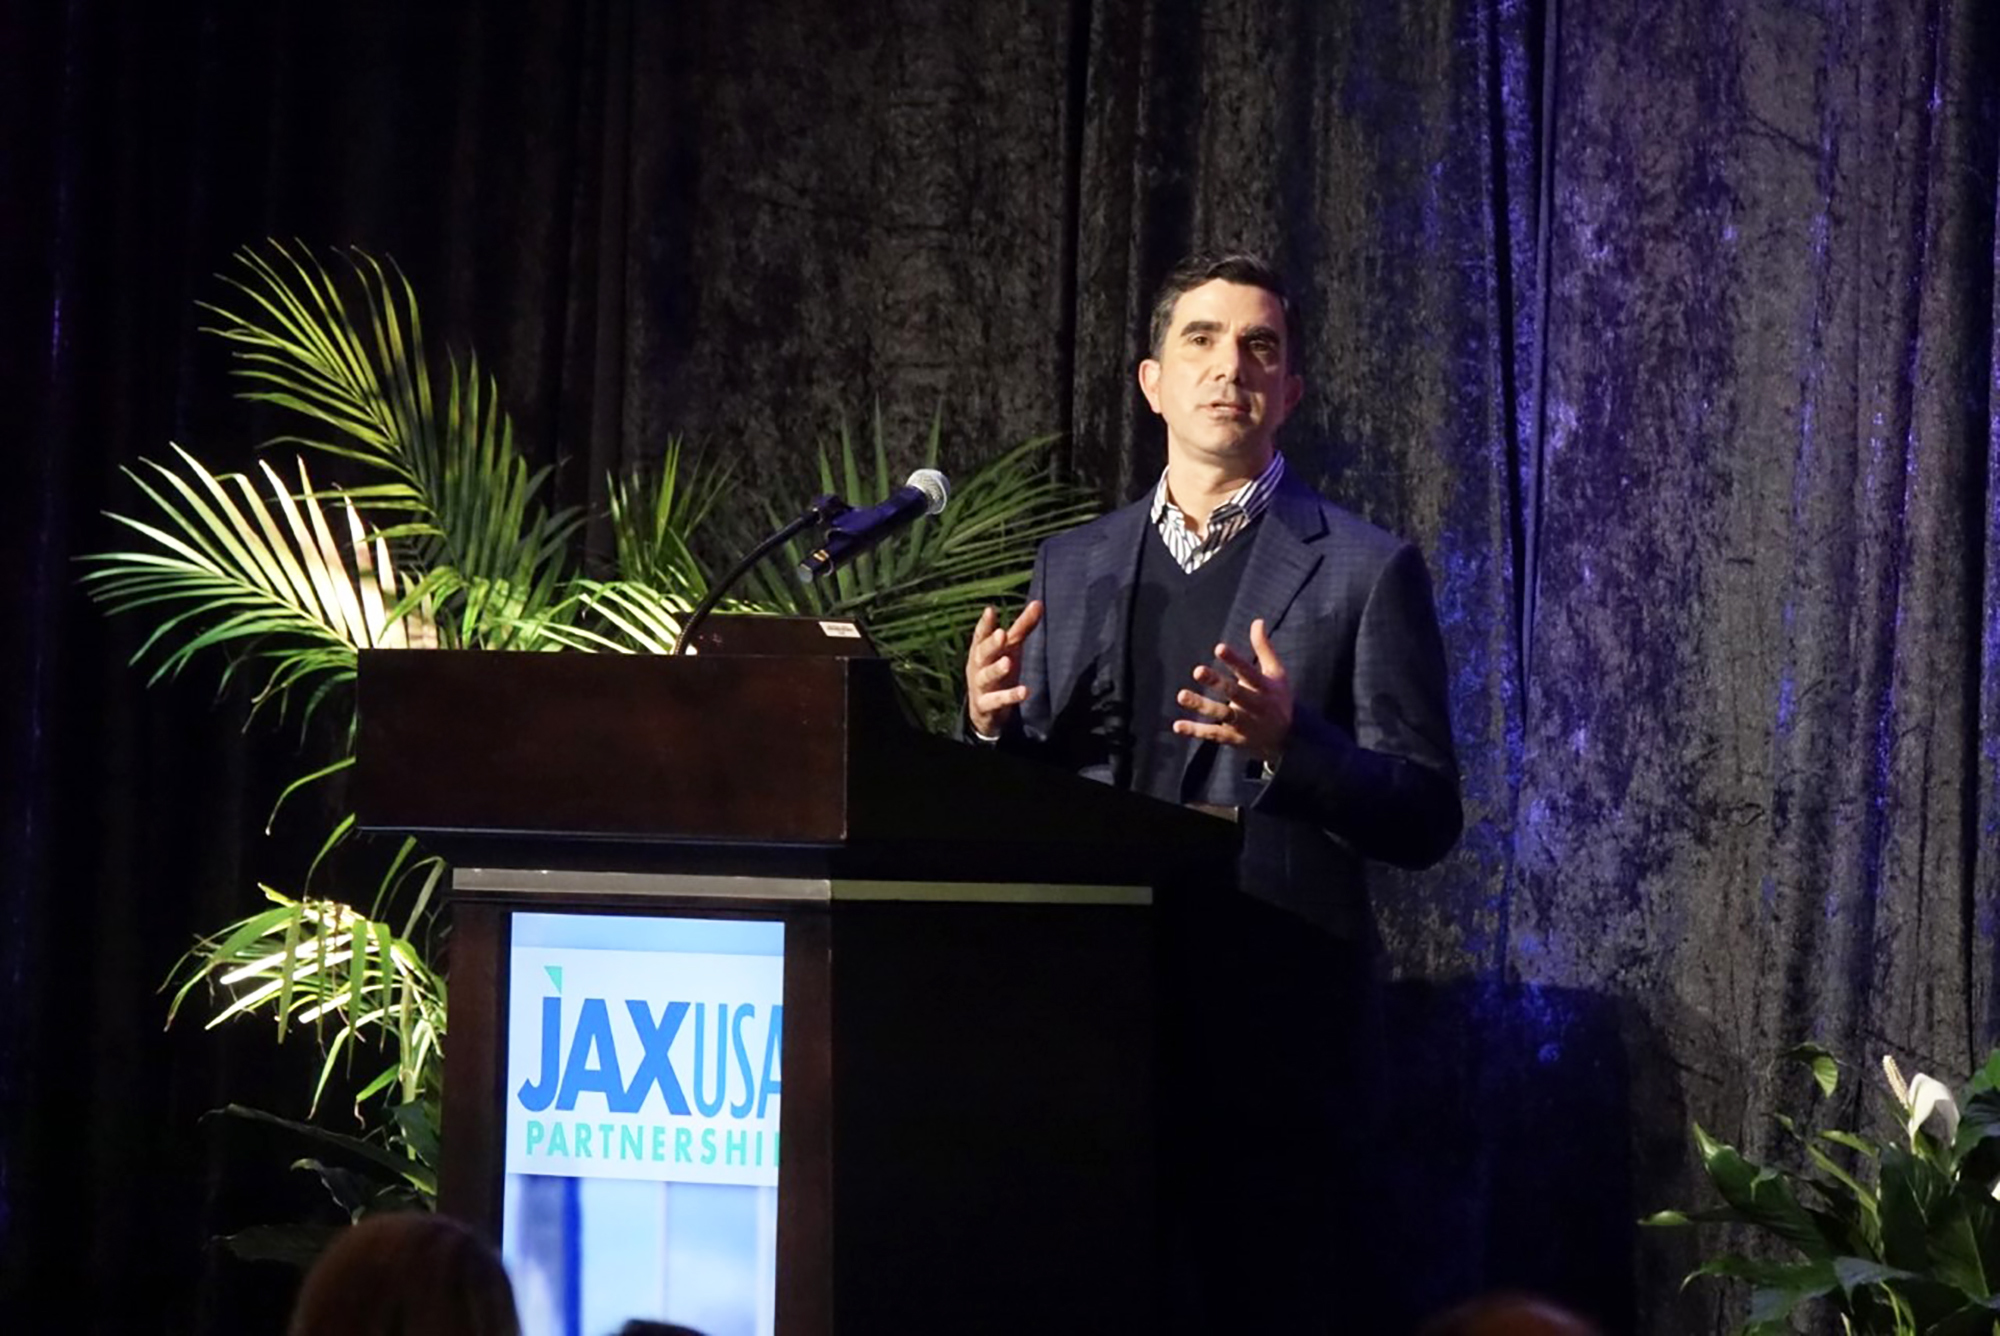 Peter Menziuso was the keynote speaker at the JAXUSA Partnership’s quarterly luncheon at Hyatt Regency Jacksonville Riverfront